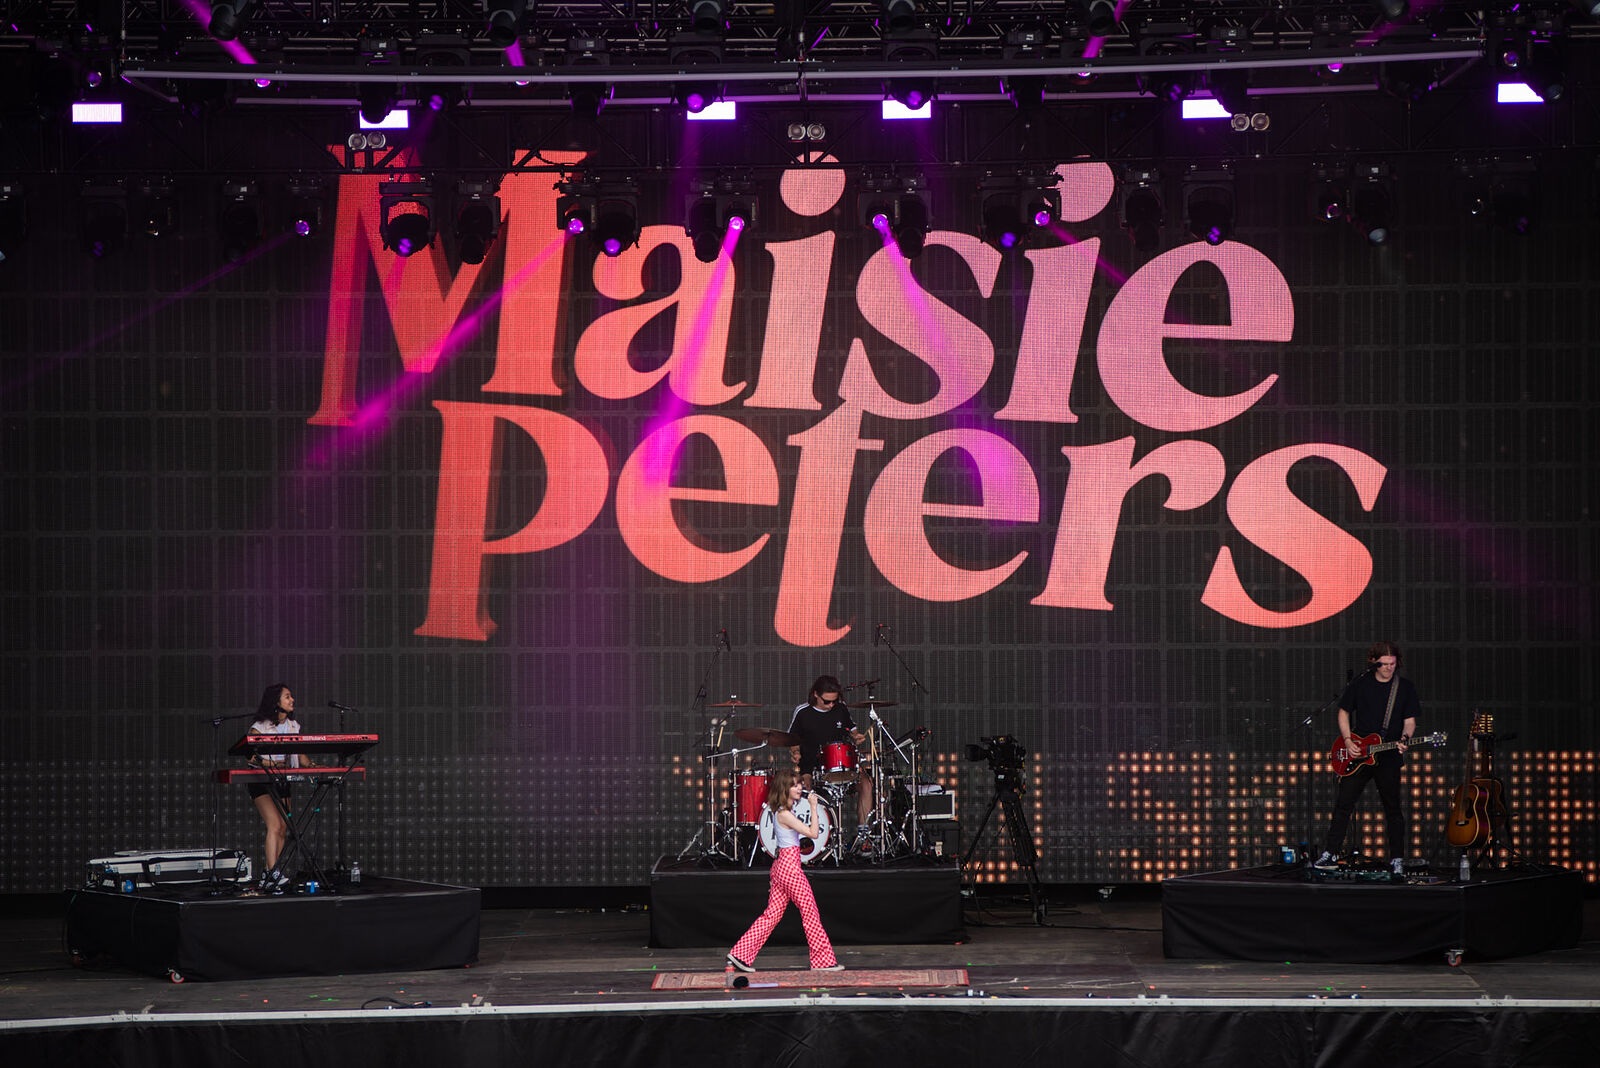 Maisie Peters